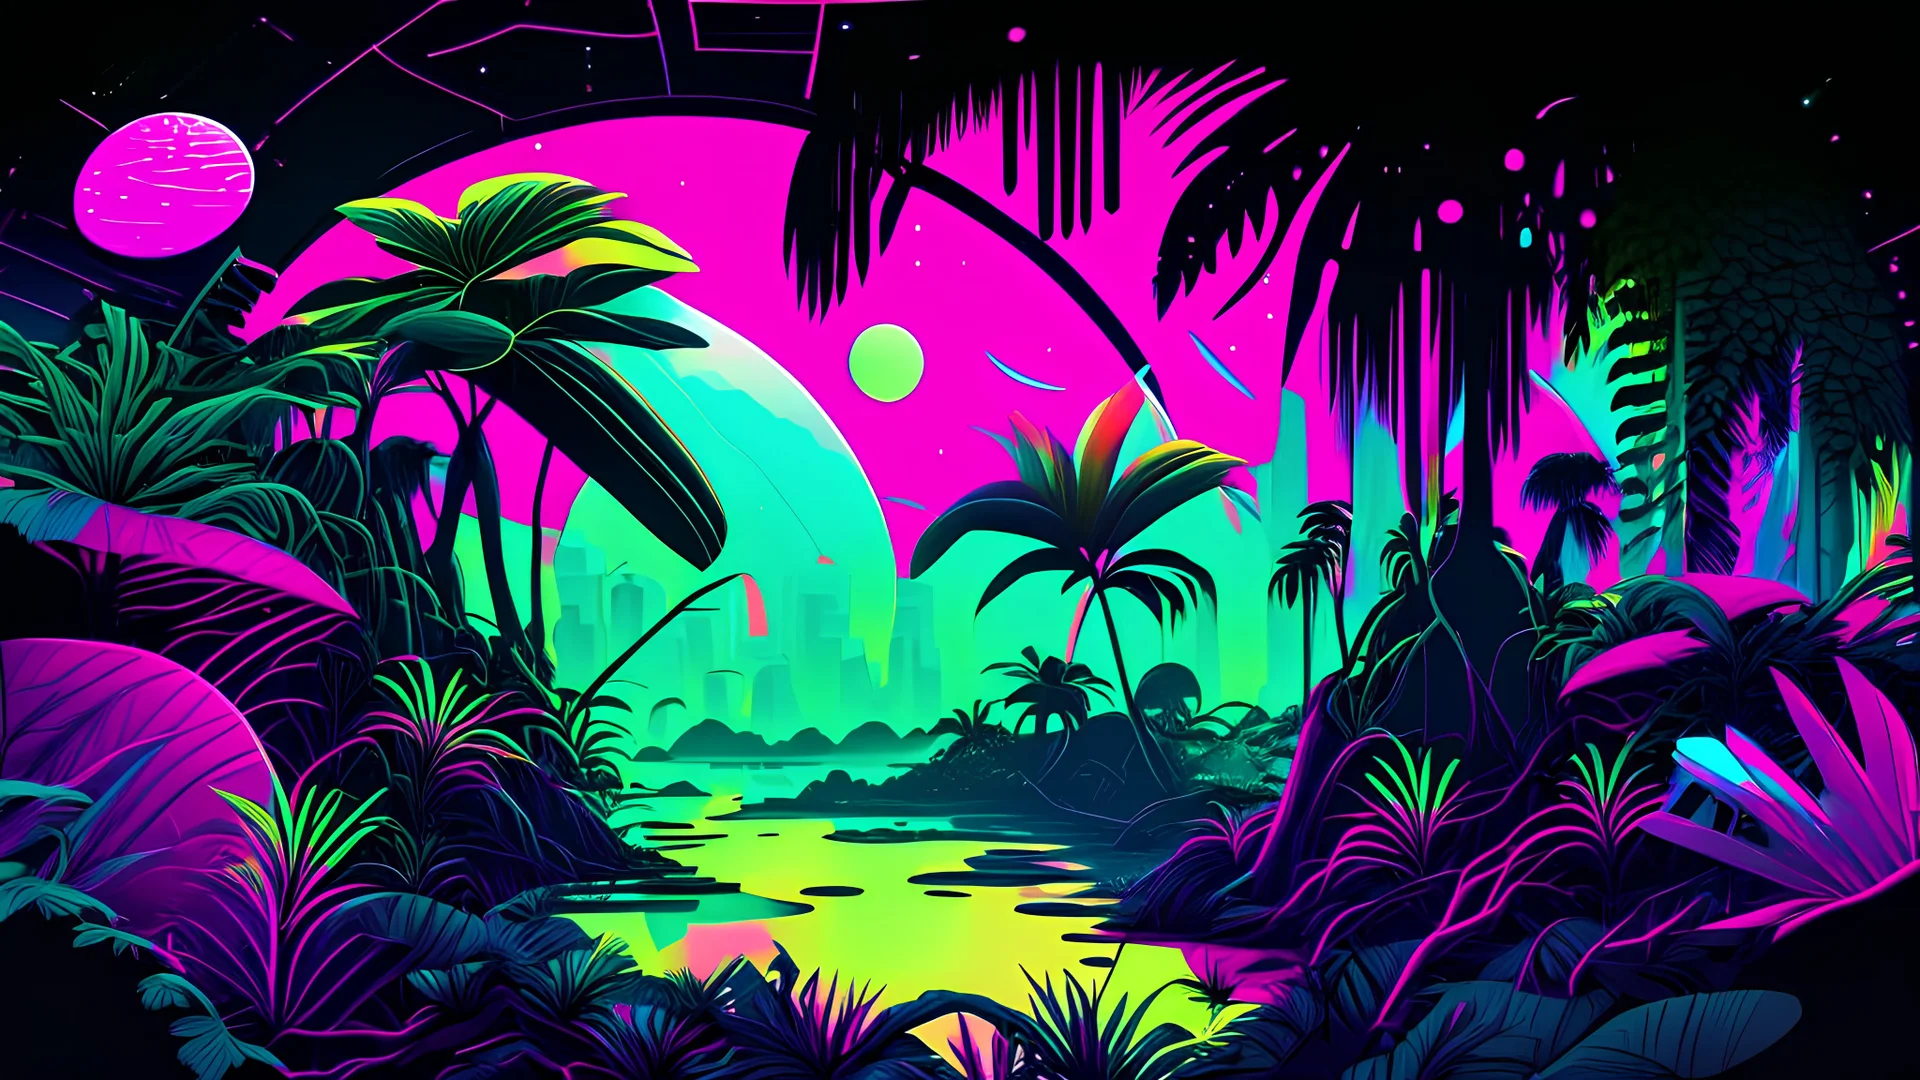 CYCEDELIC exoplanet dreamscape paradise oasis in Lush&vibrant crayon kitz SECRET SYNTHWAVE JUNGLECORE rainforest NFT vector image